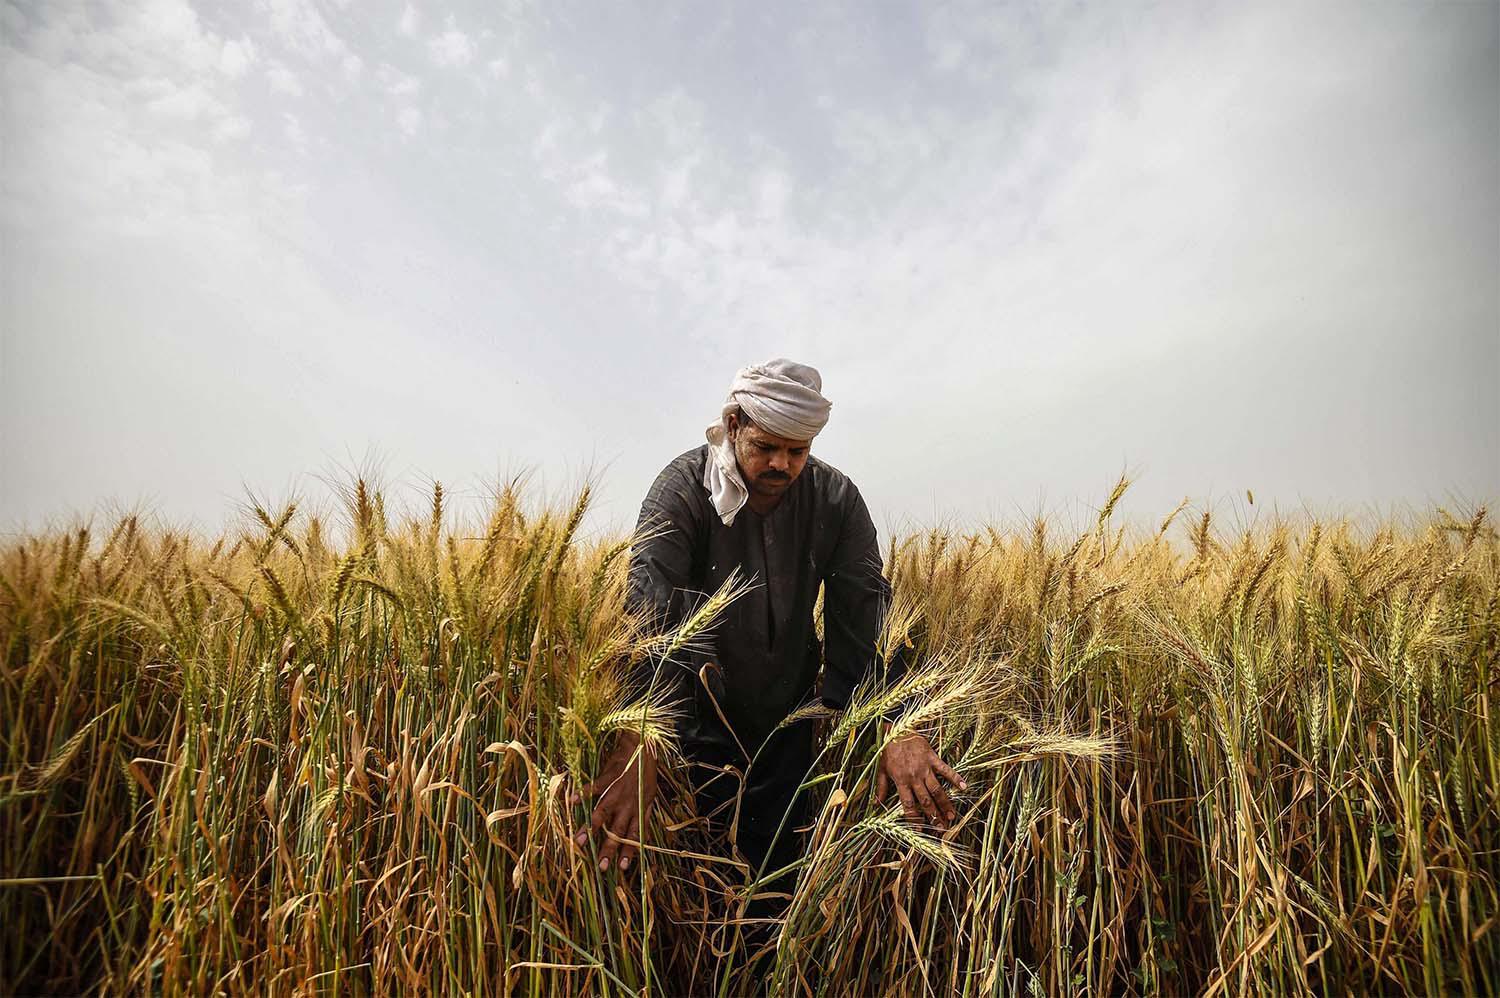 Wheat field in Saqiyat al-Manqadi village in the northern Nile Delta province of Menoufia in Egypt